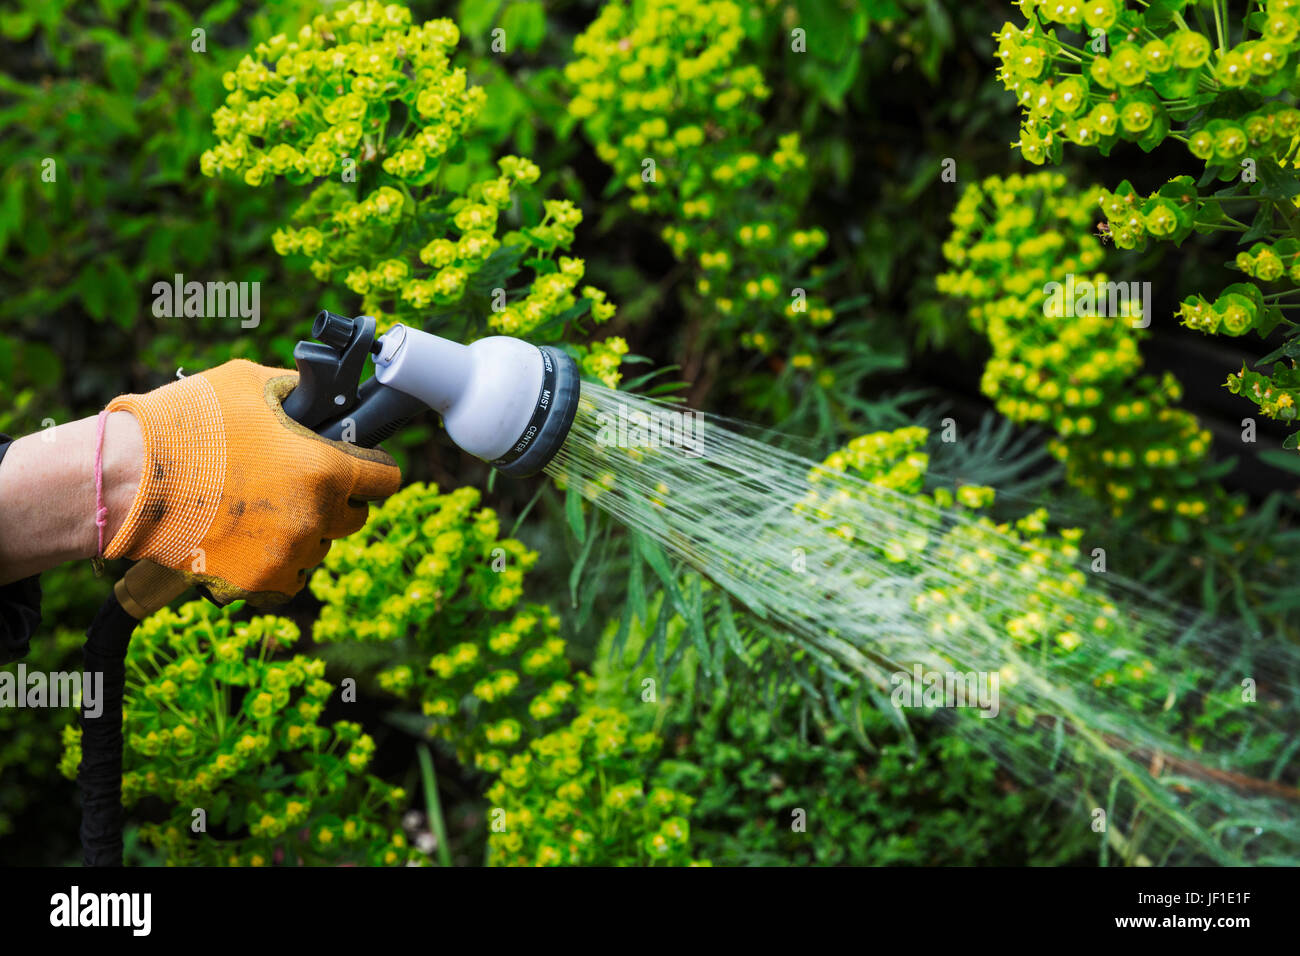 A gardener watering plants in a flowerbed using a waterhose. Stock Photo